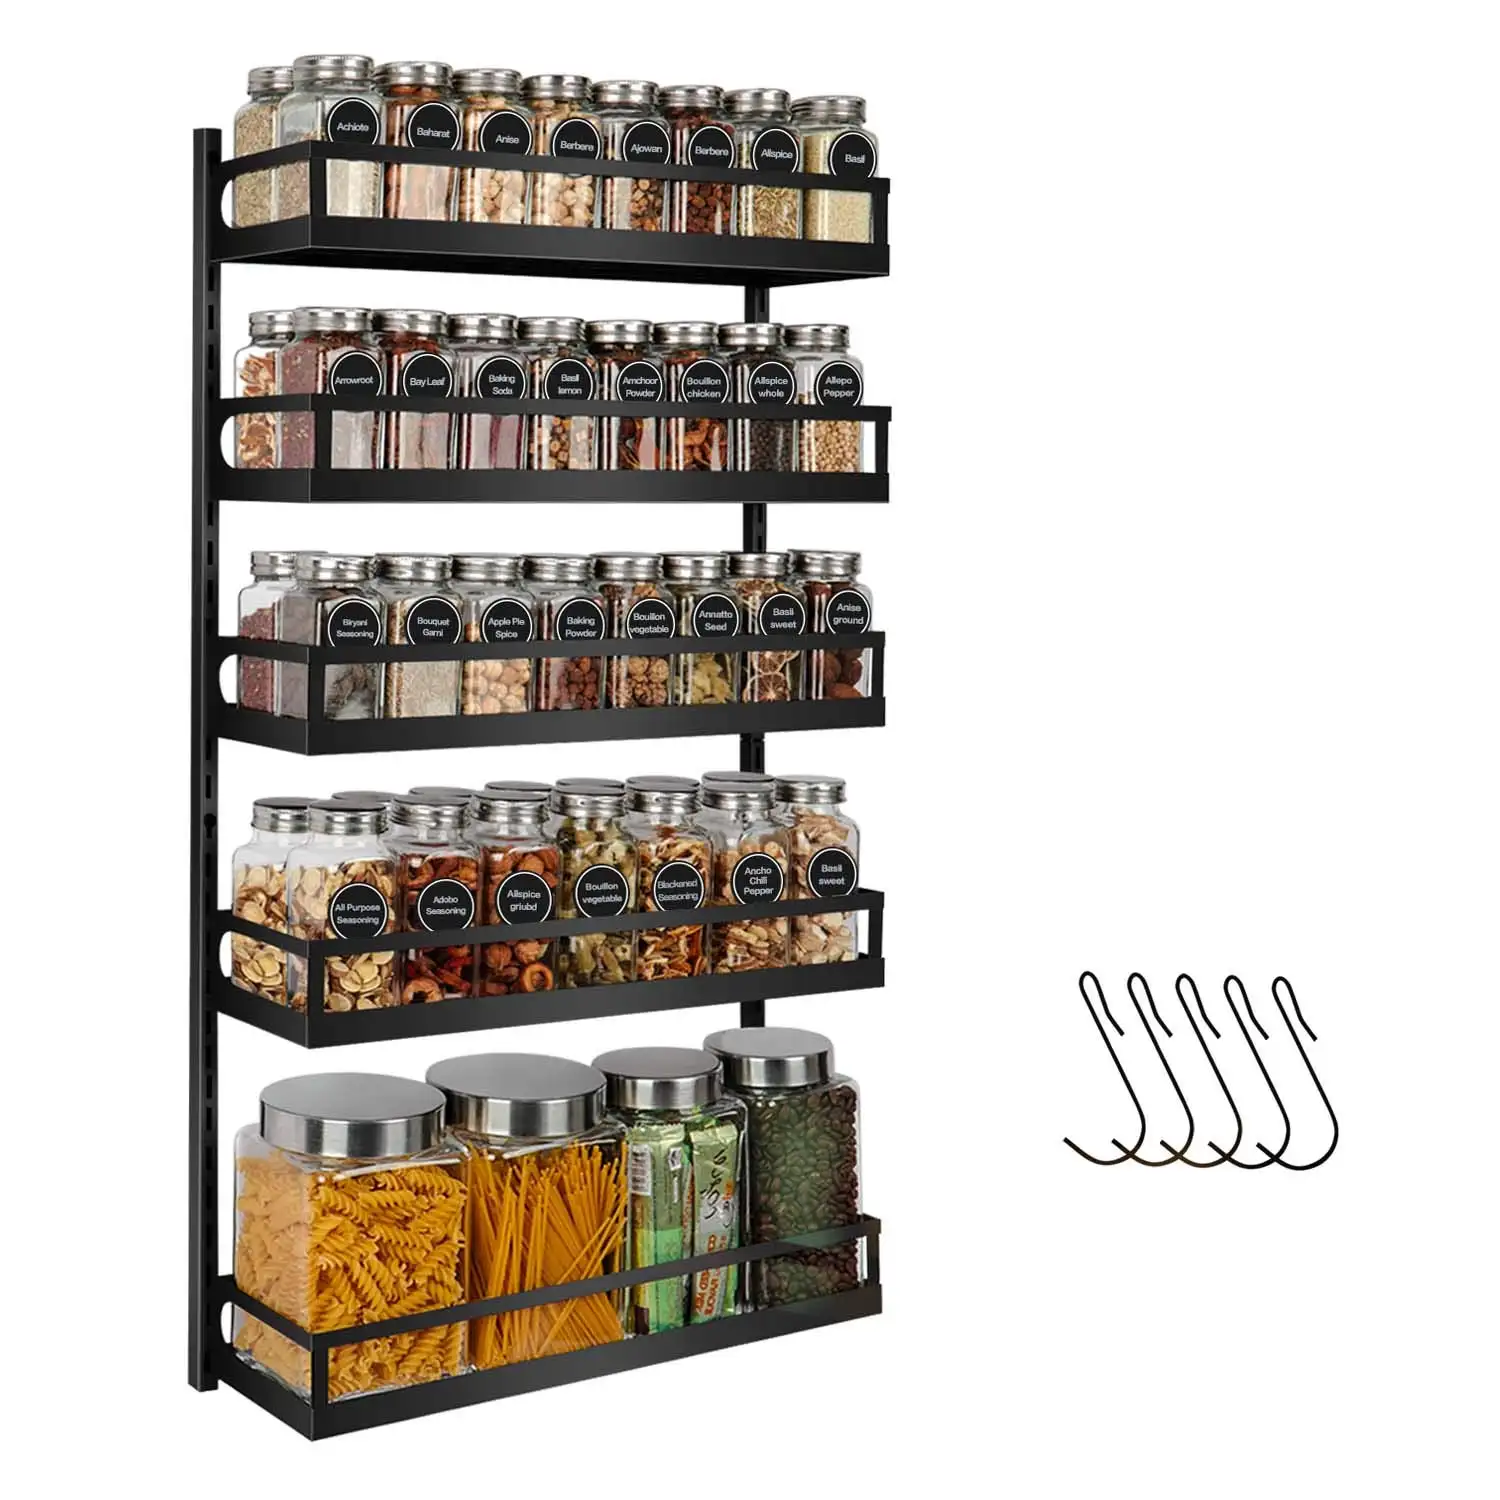 5 Tier Height-Adjustable Hanging Wall Mount Spice Rack Storage Organizer For Kitchen